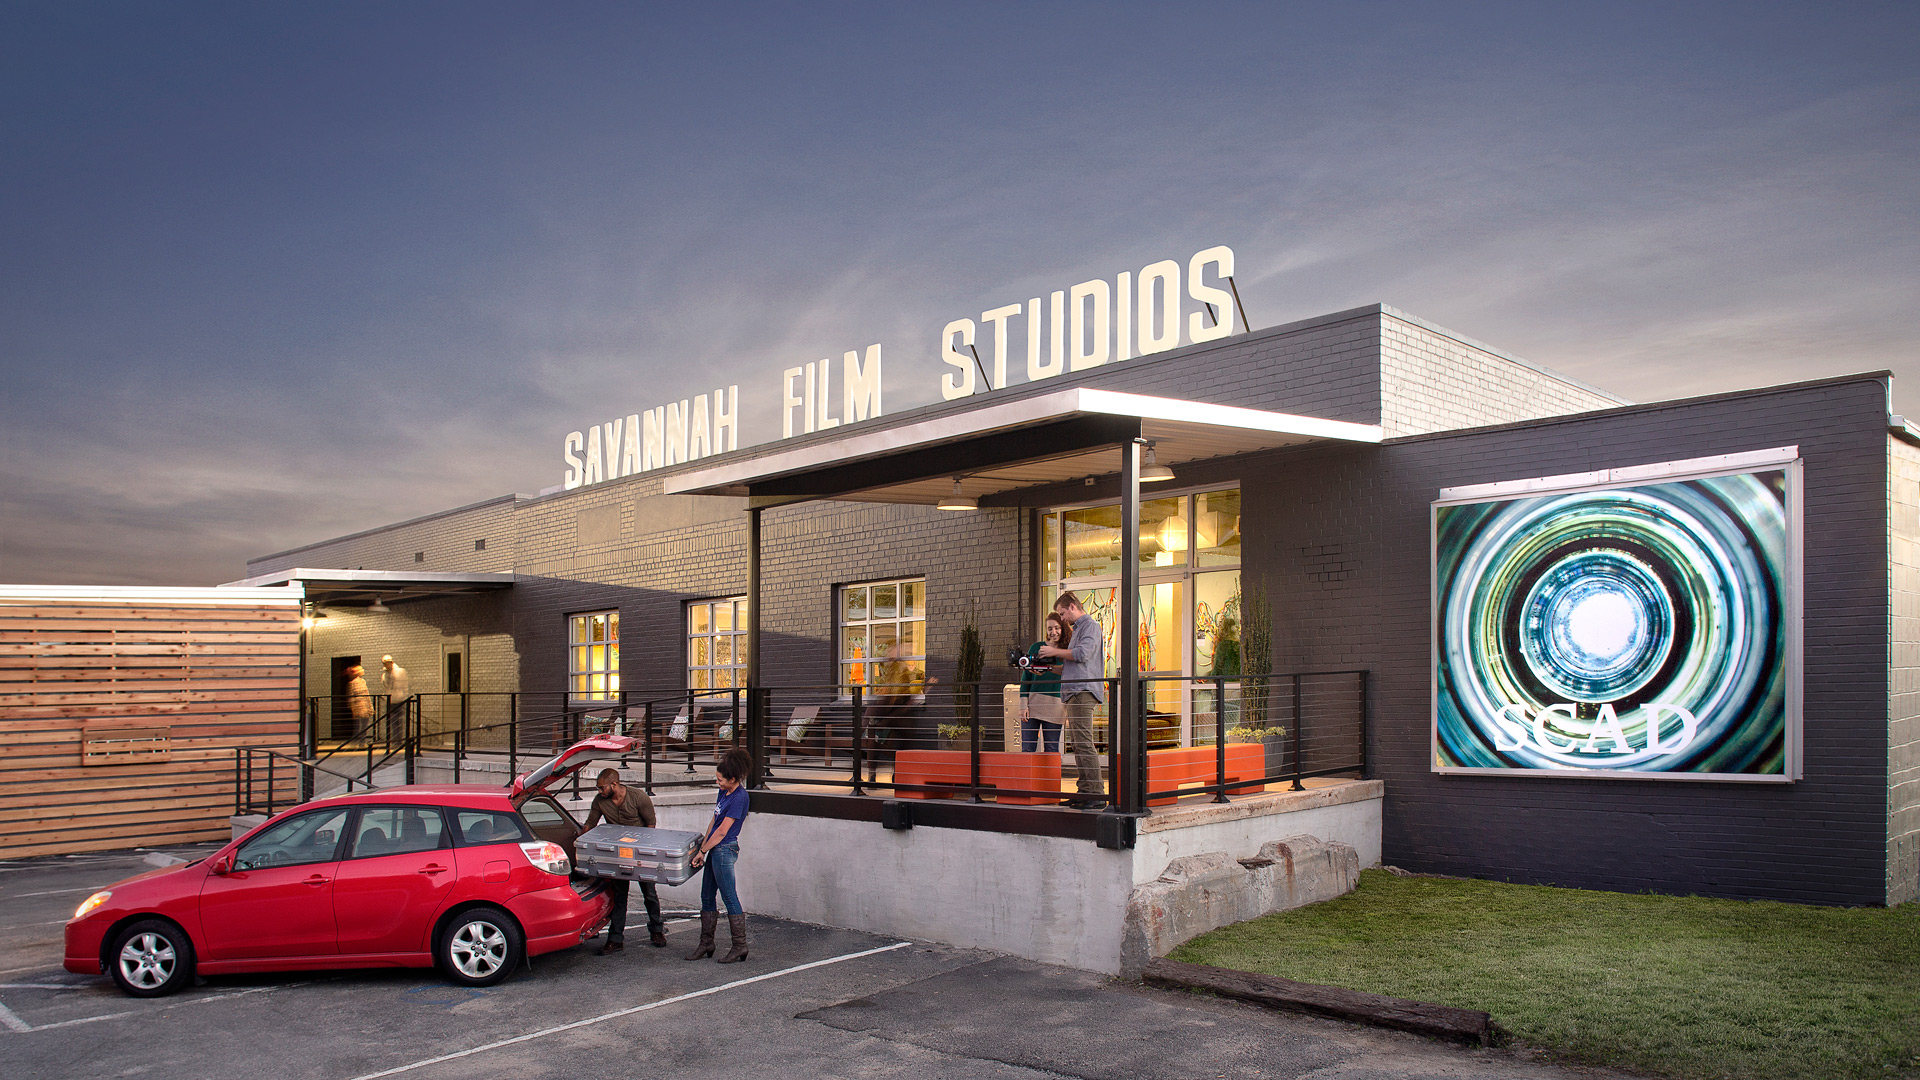 Savannah Film Studios SCAD.edu